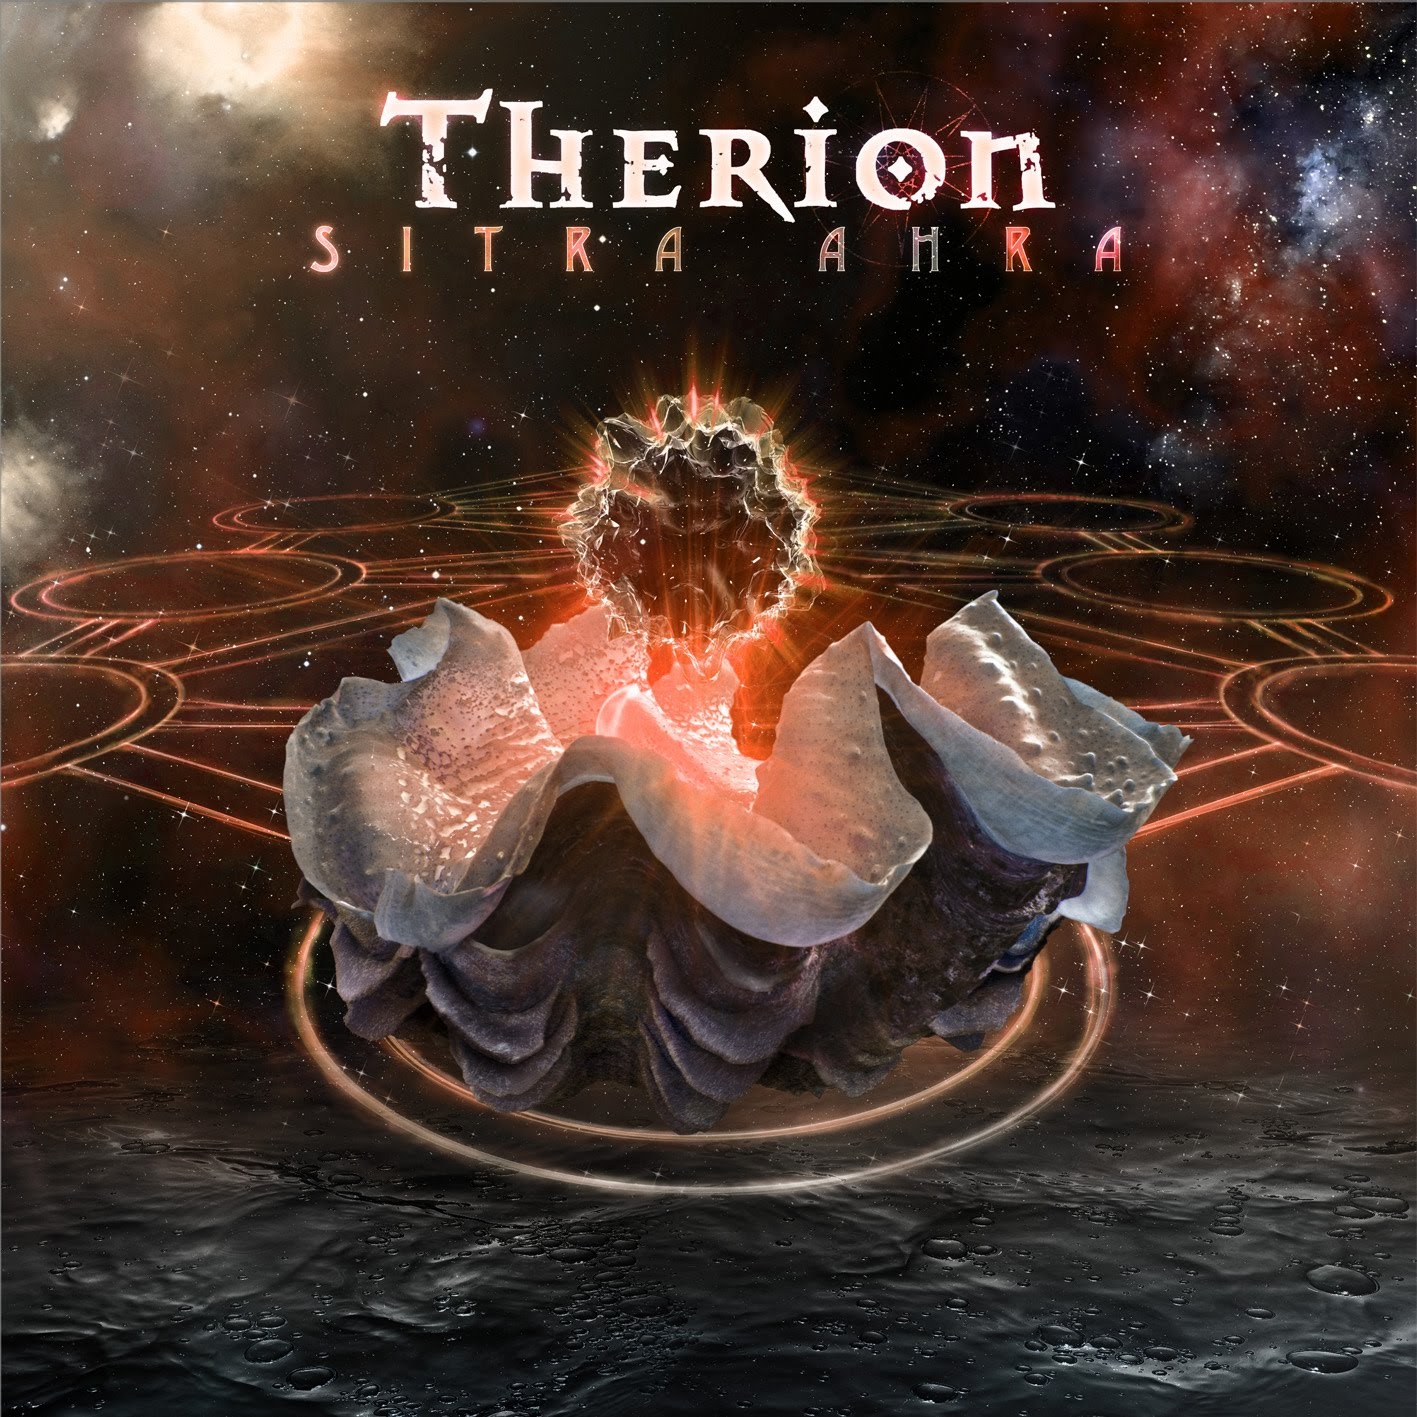 Sitra Ahra & οι Απόκρυφοι Συμβολισμοί στο Νέο CD των Therion